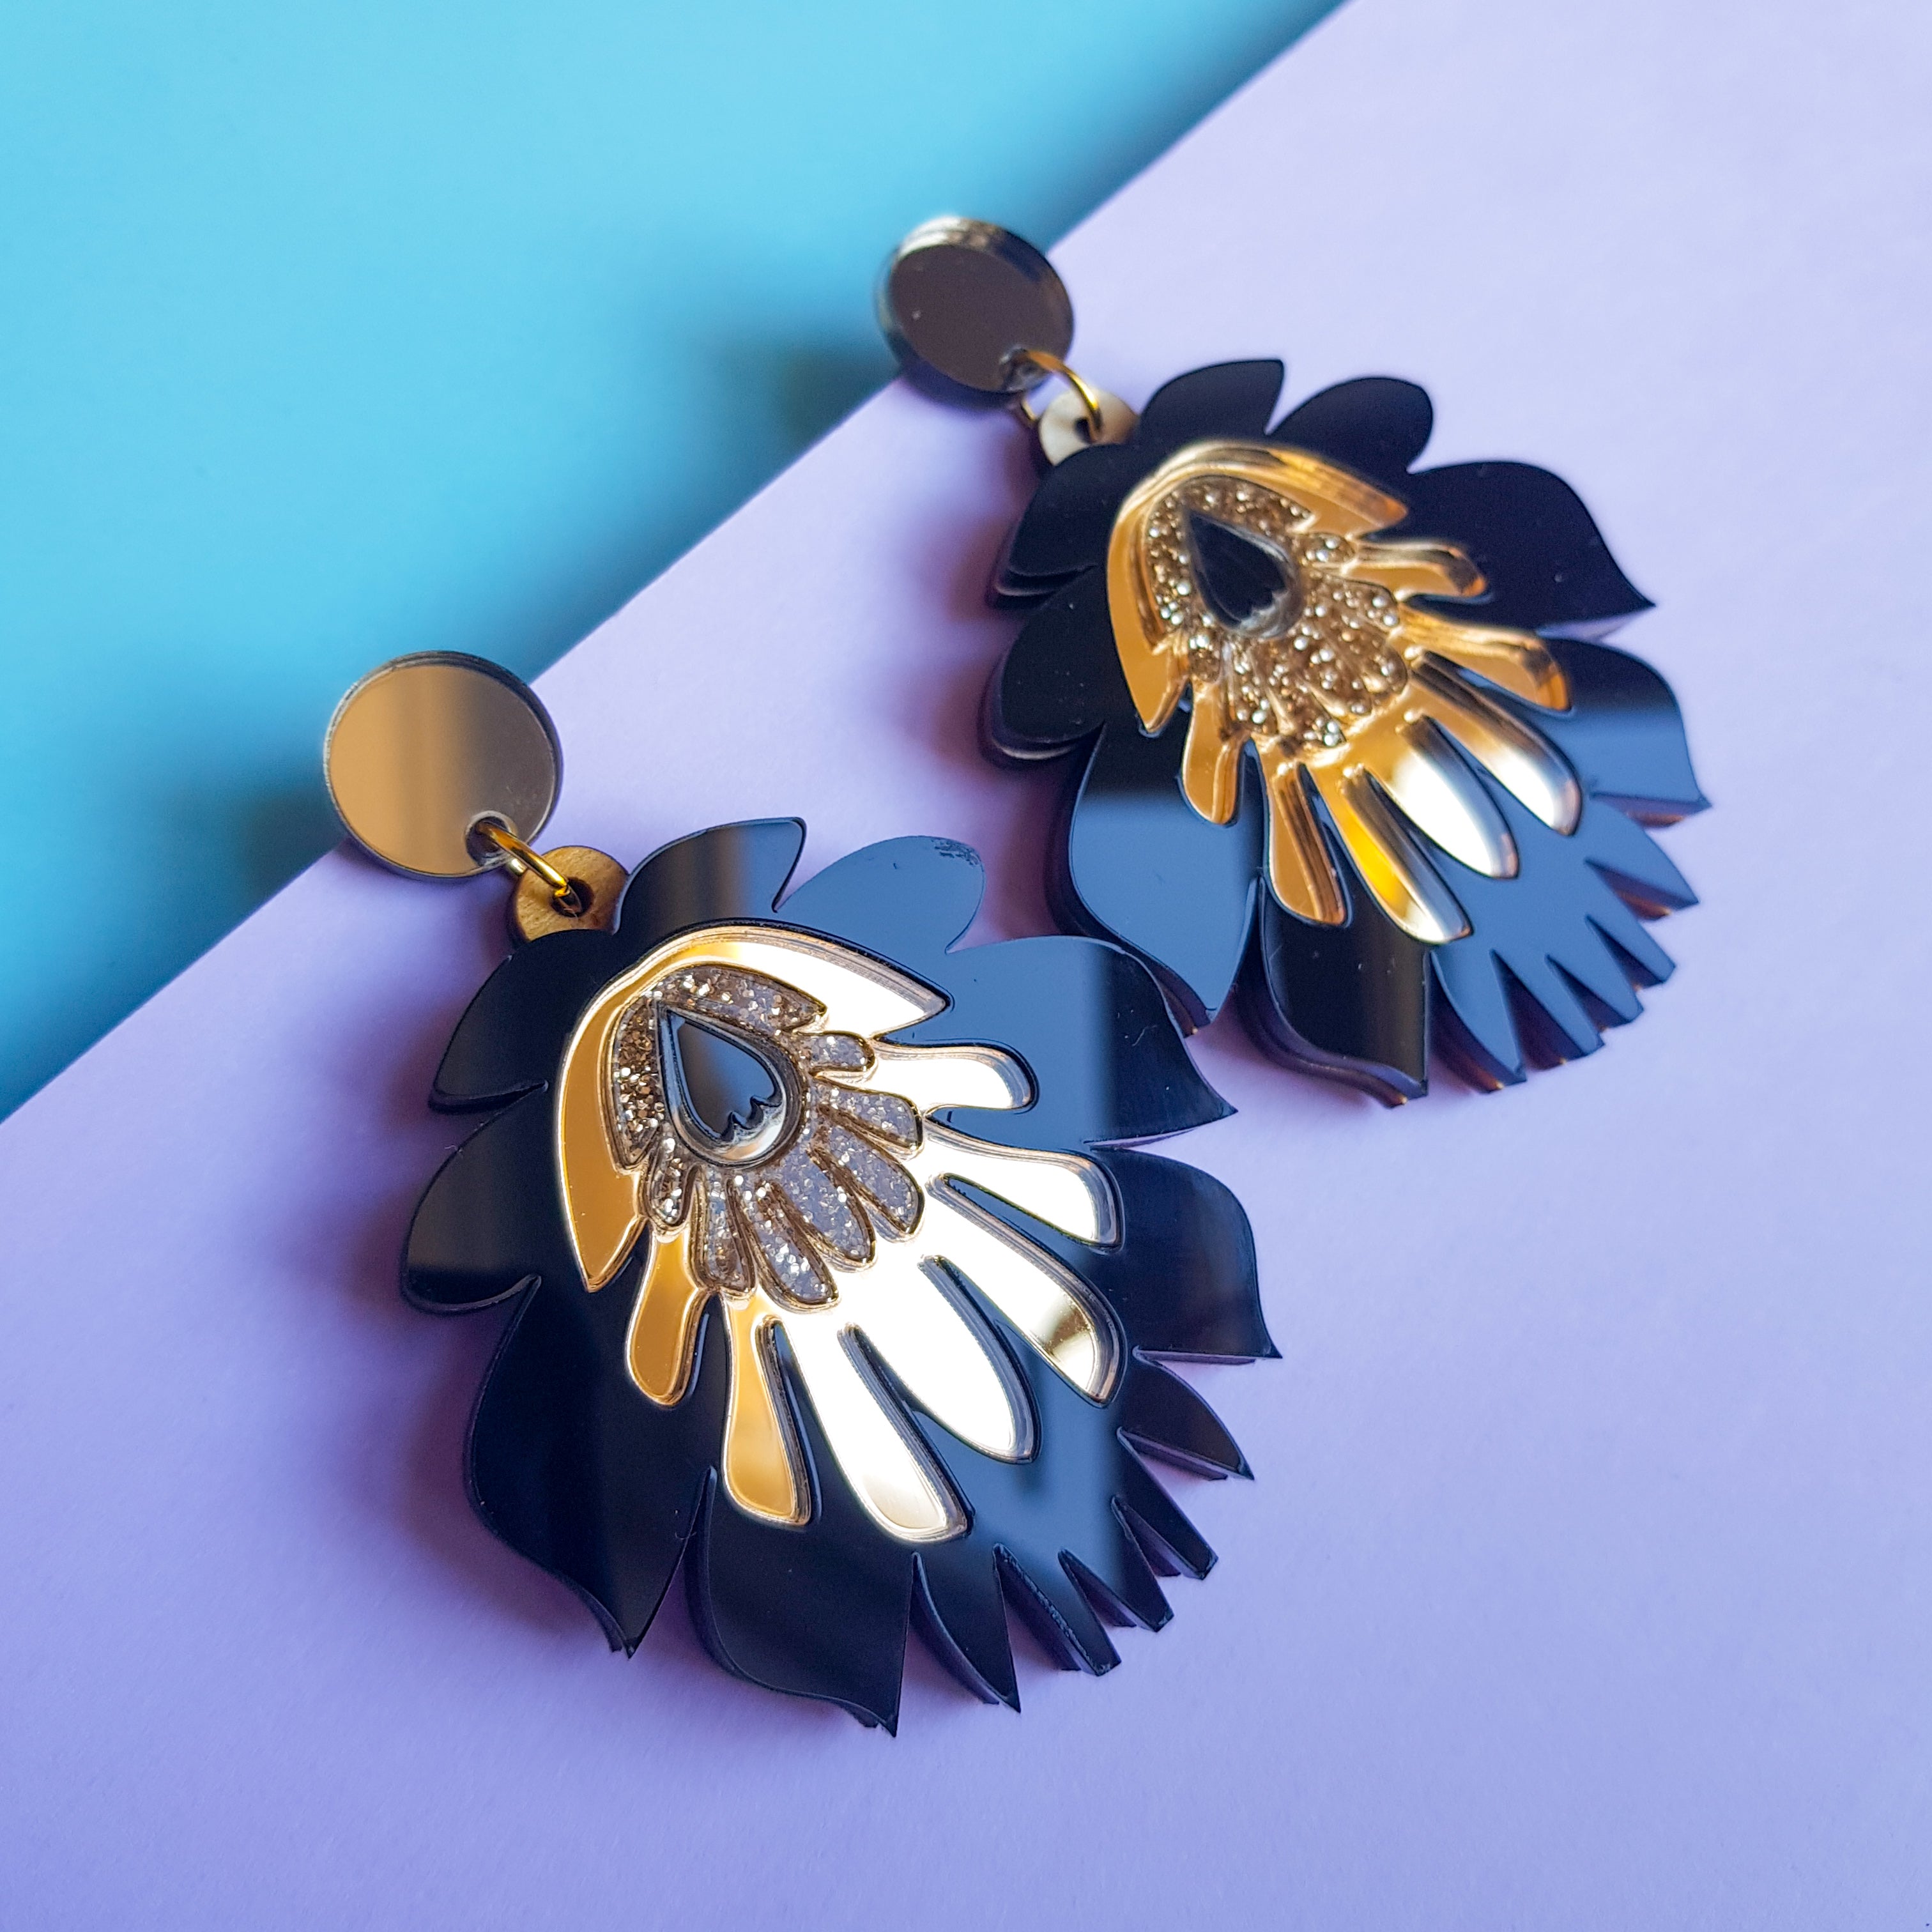 Folk Flower Statement Earrings, black/gold